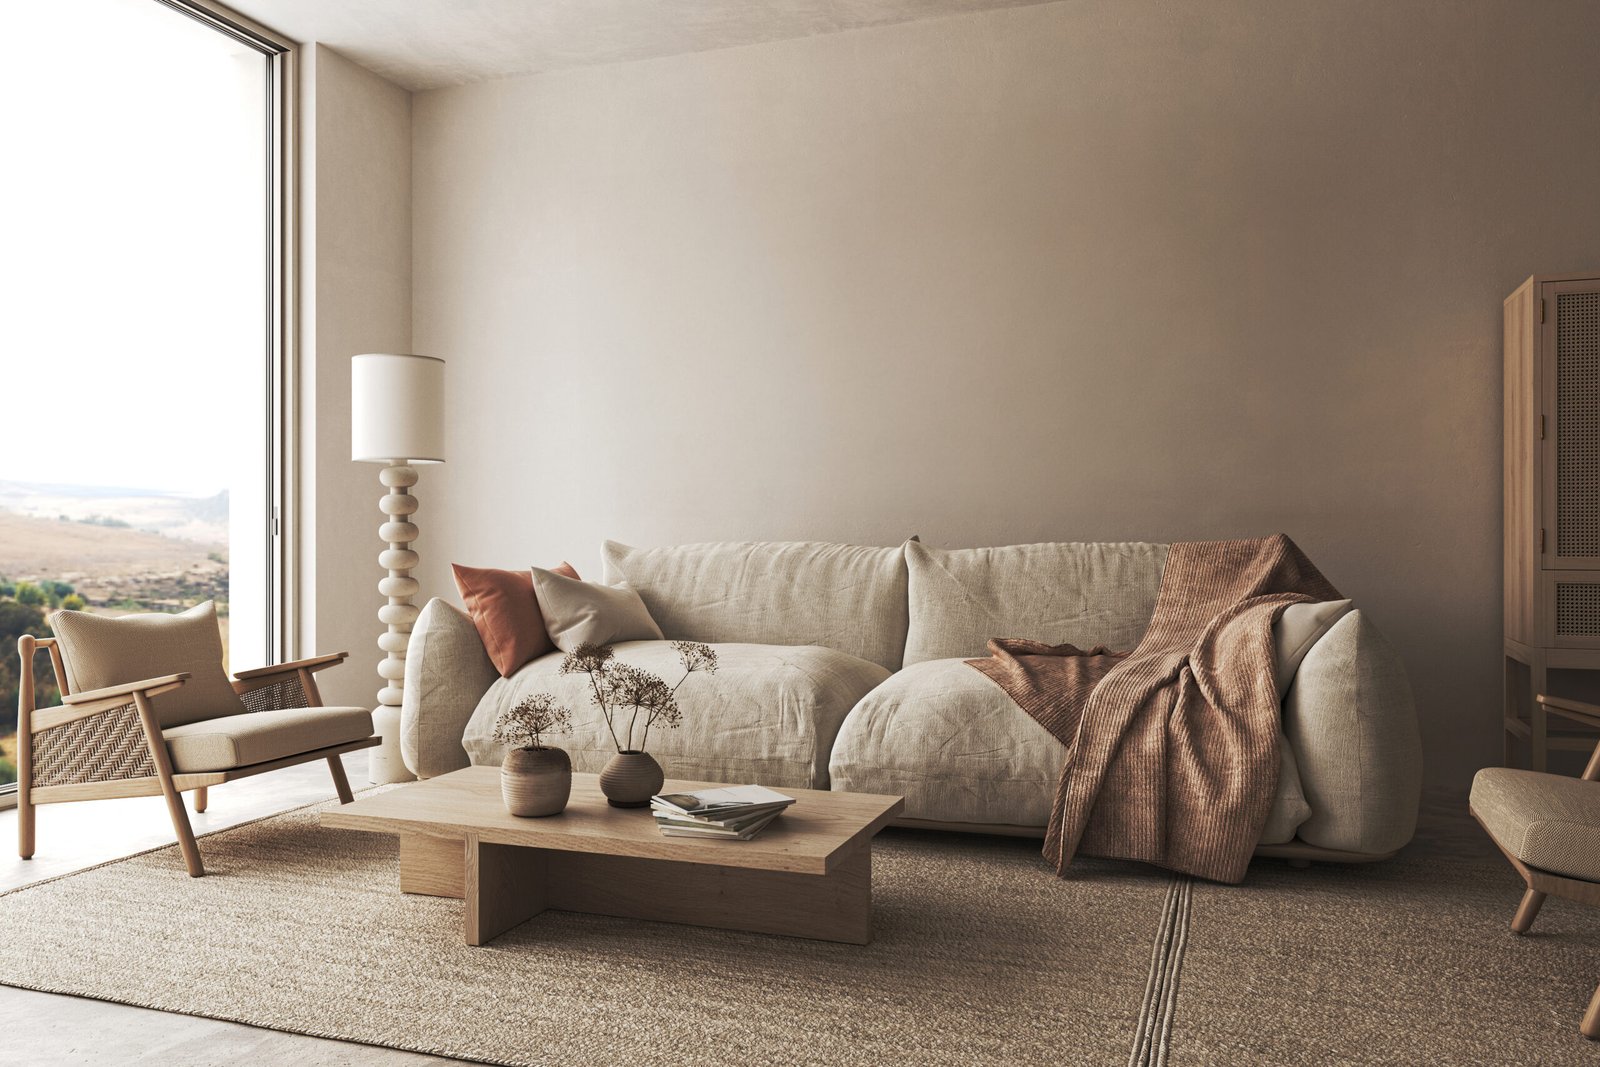 Boho beige livingroom with dry plant in vase background.